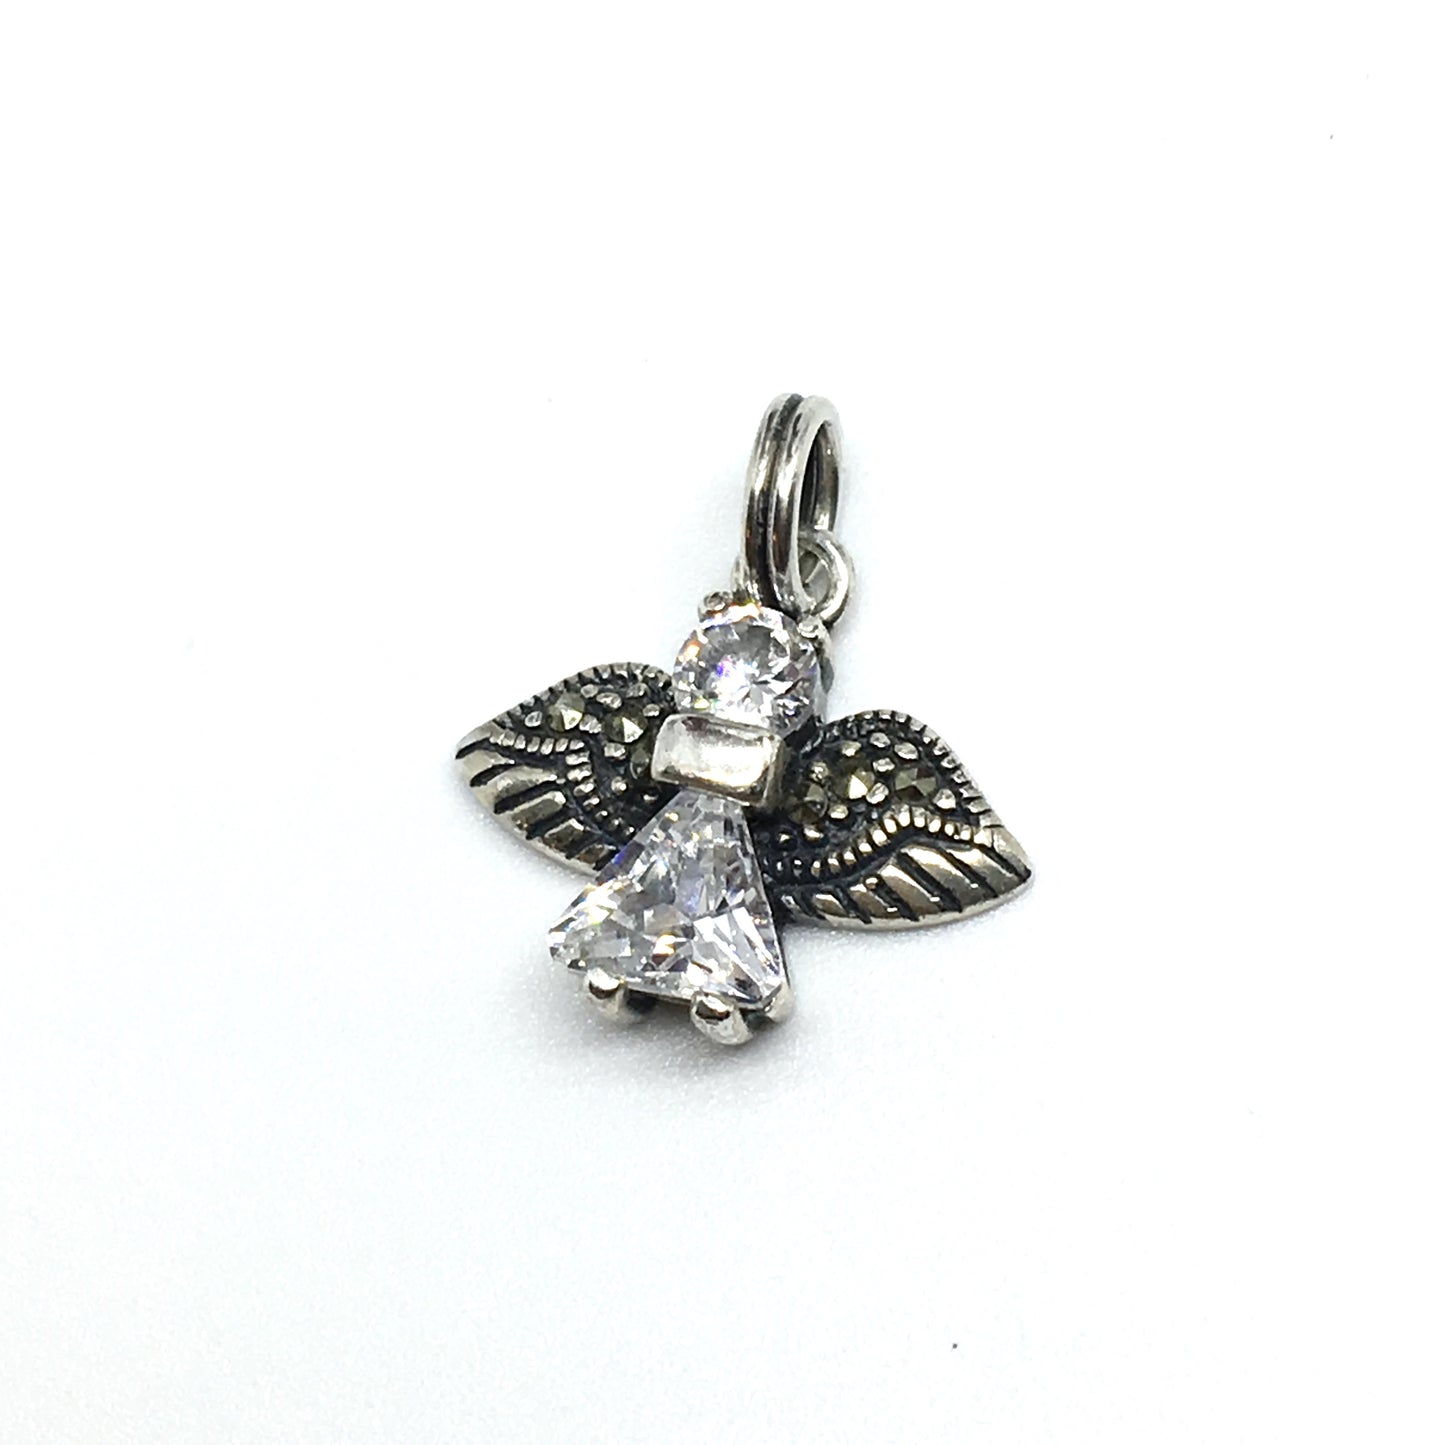 Jewelry | Sterling Silver Precious Cz Angel Charm Pendant